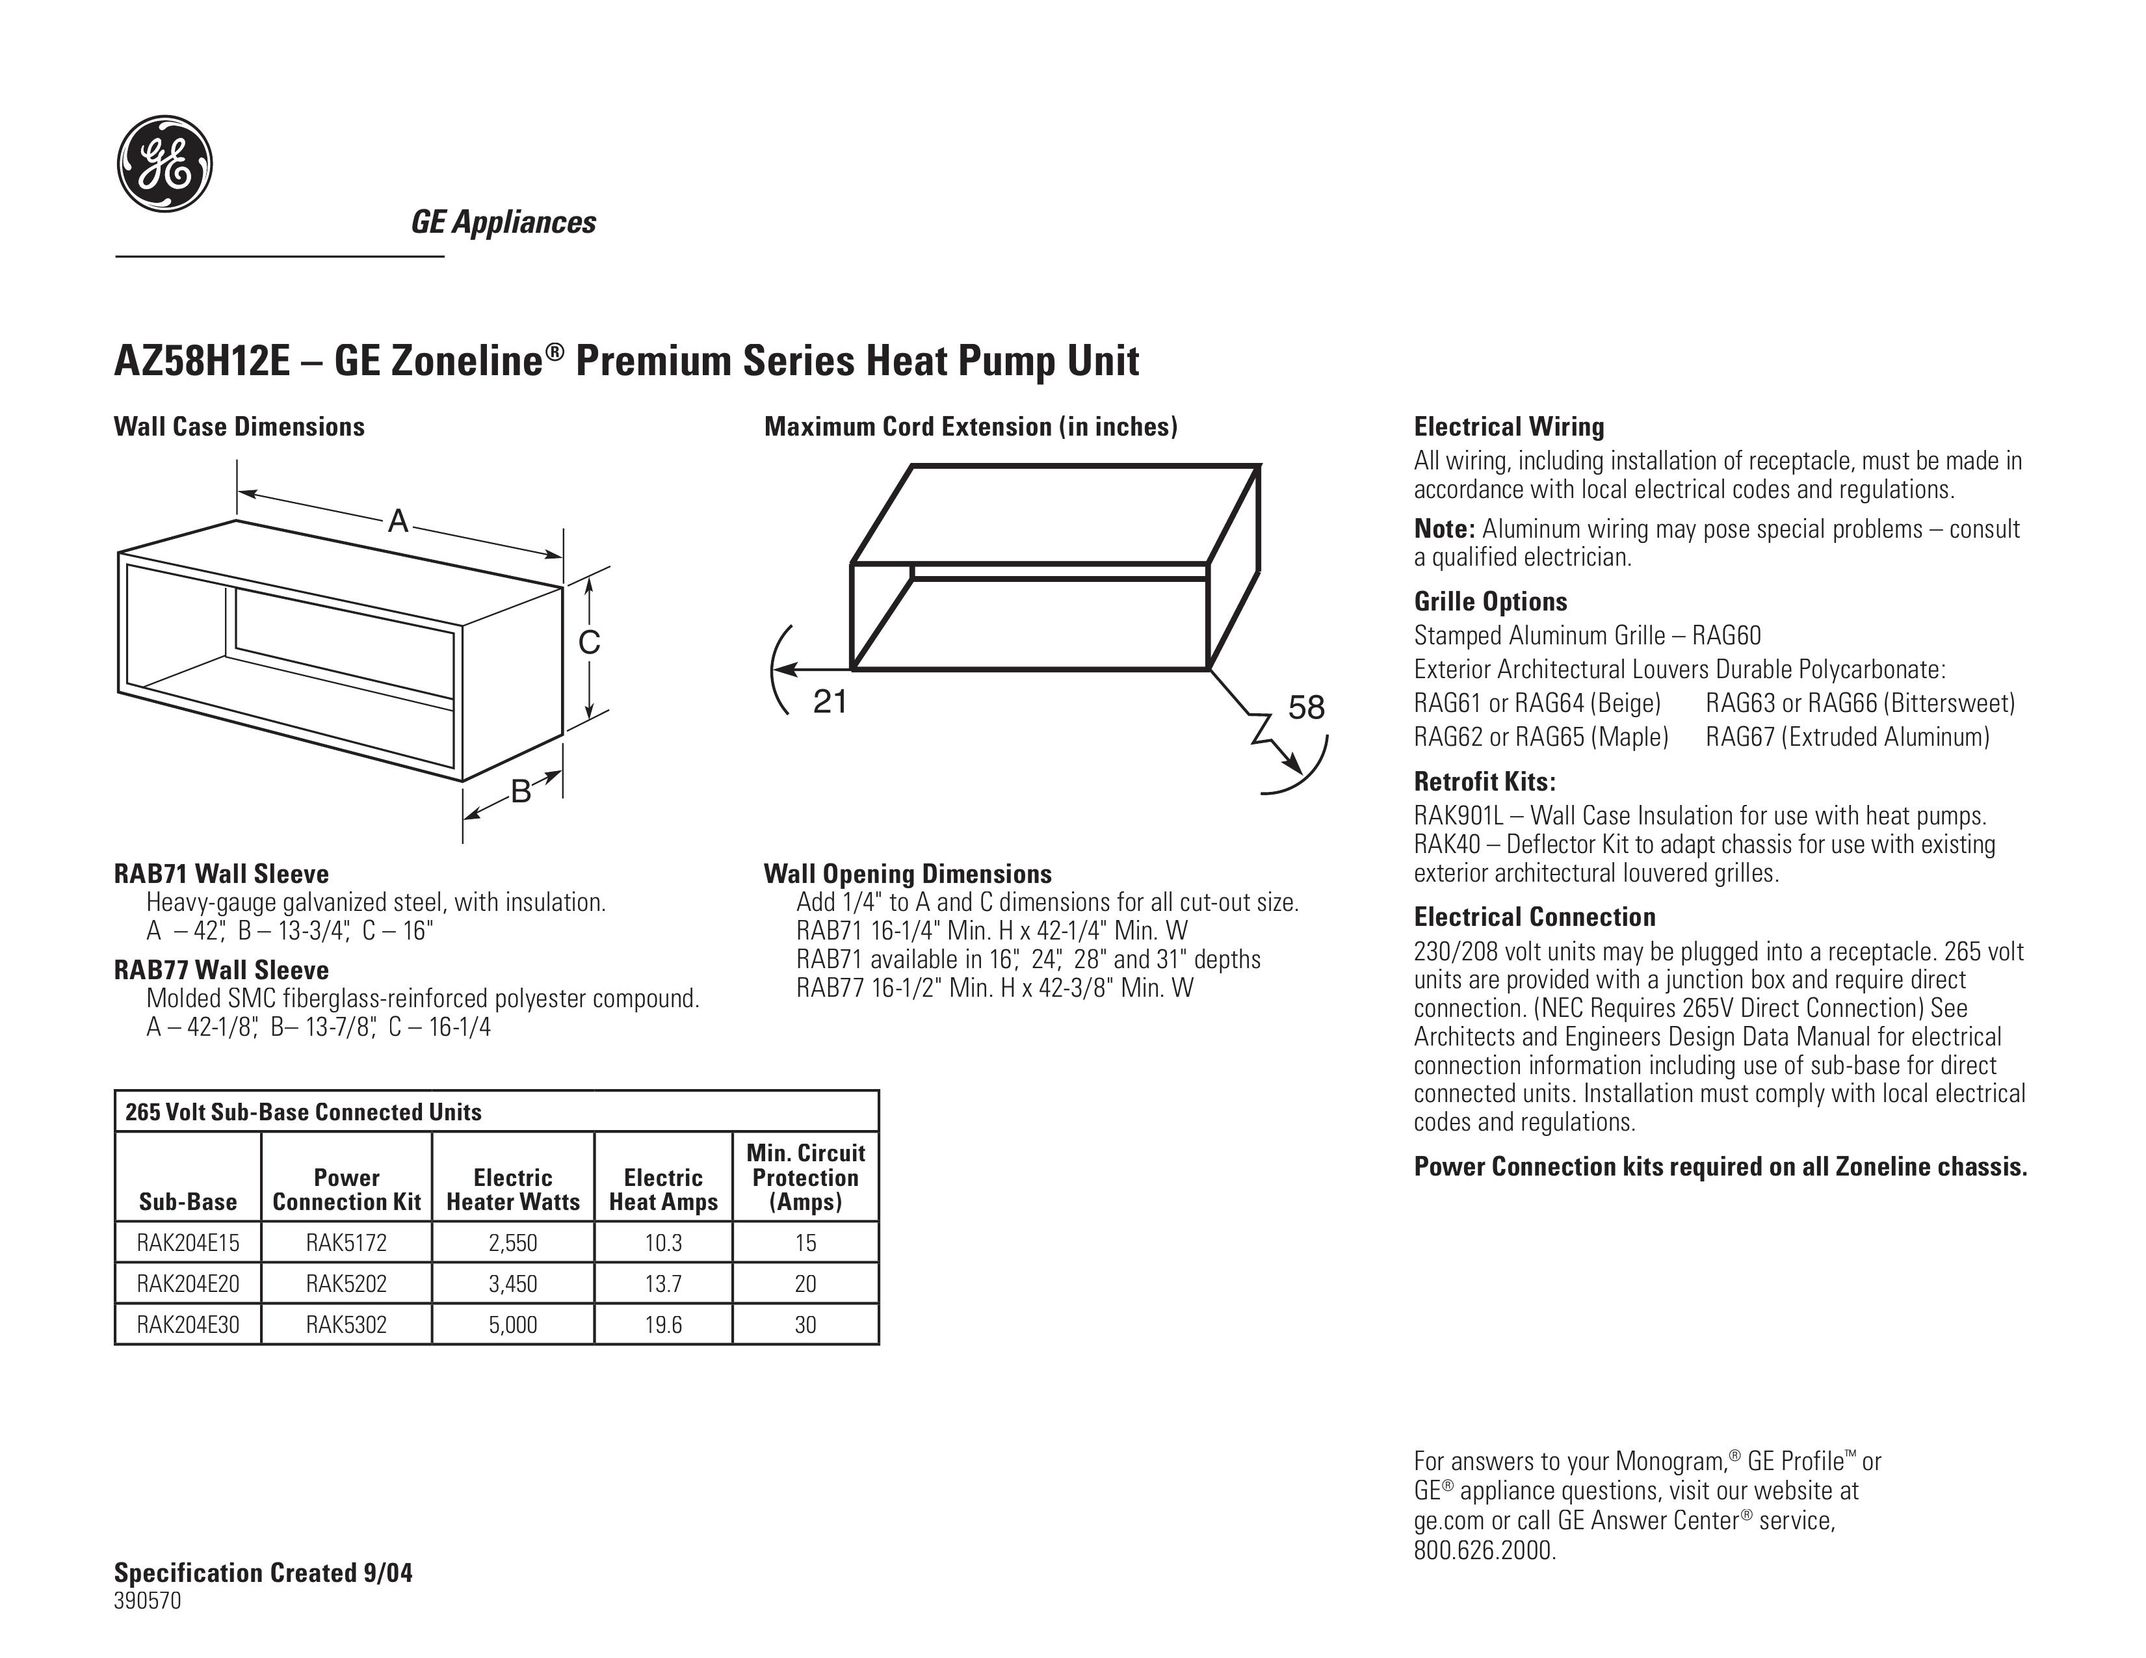 GE AZ58H12EAD Heat Pump User Manual